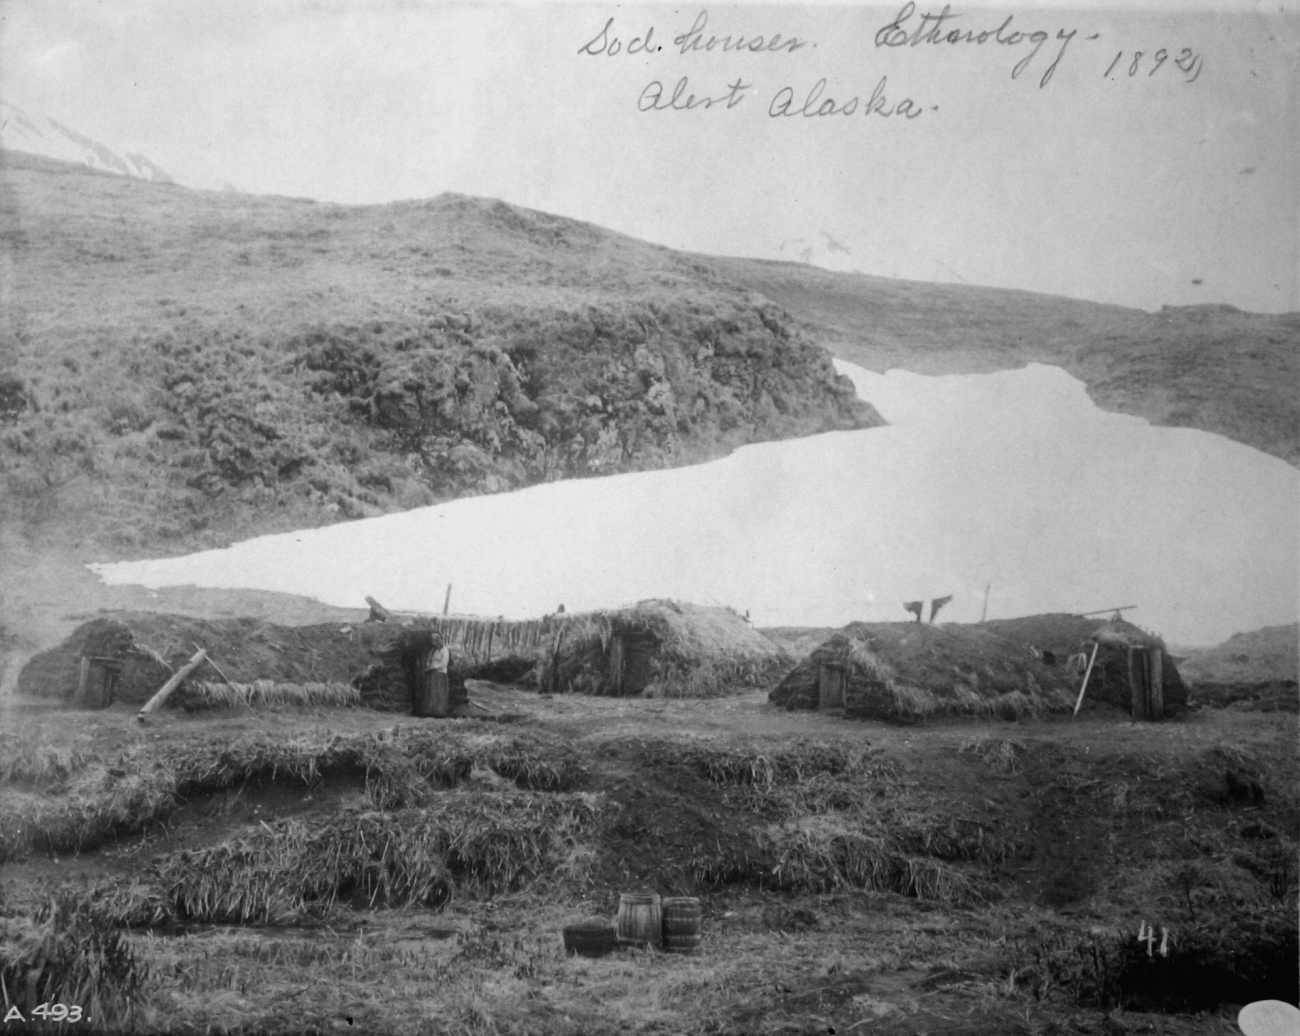 Sod houses, ethnology, Alert, AK, 1892